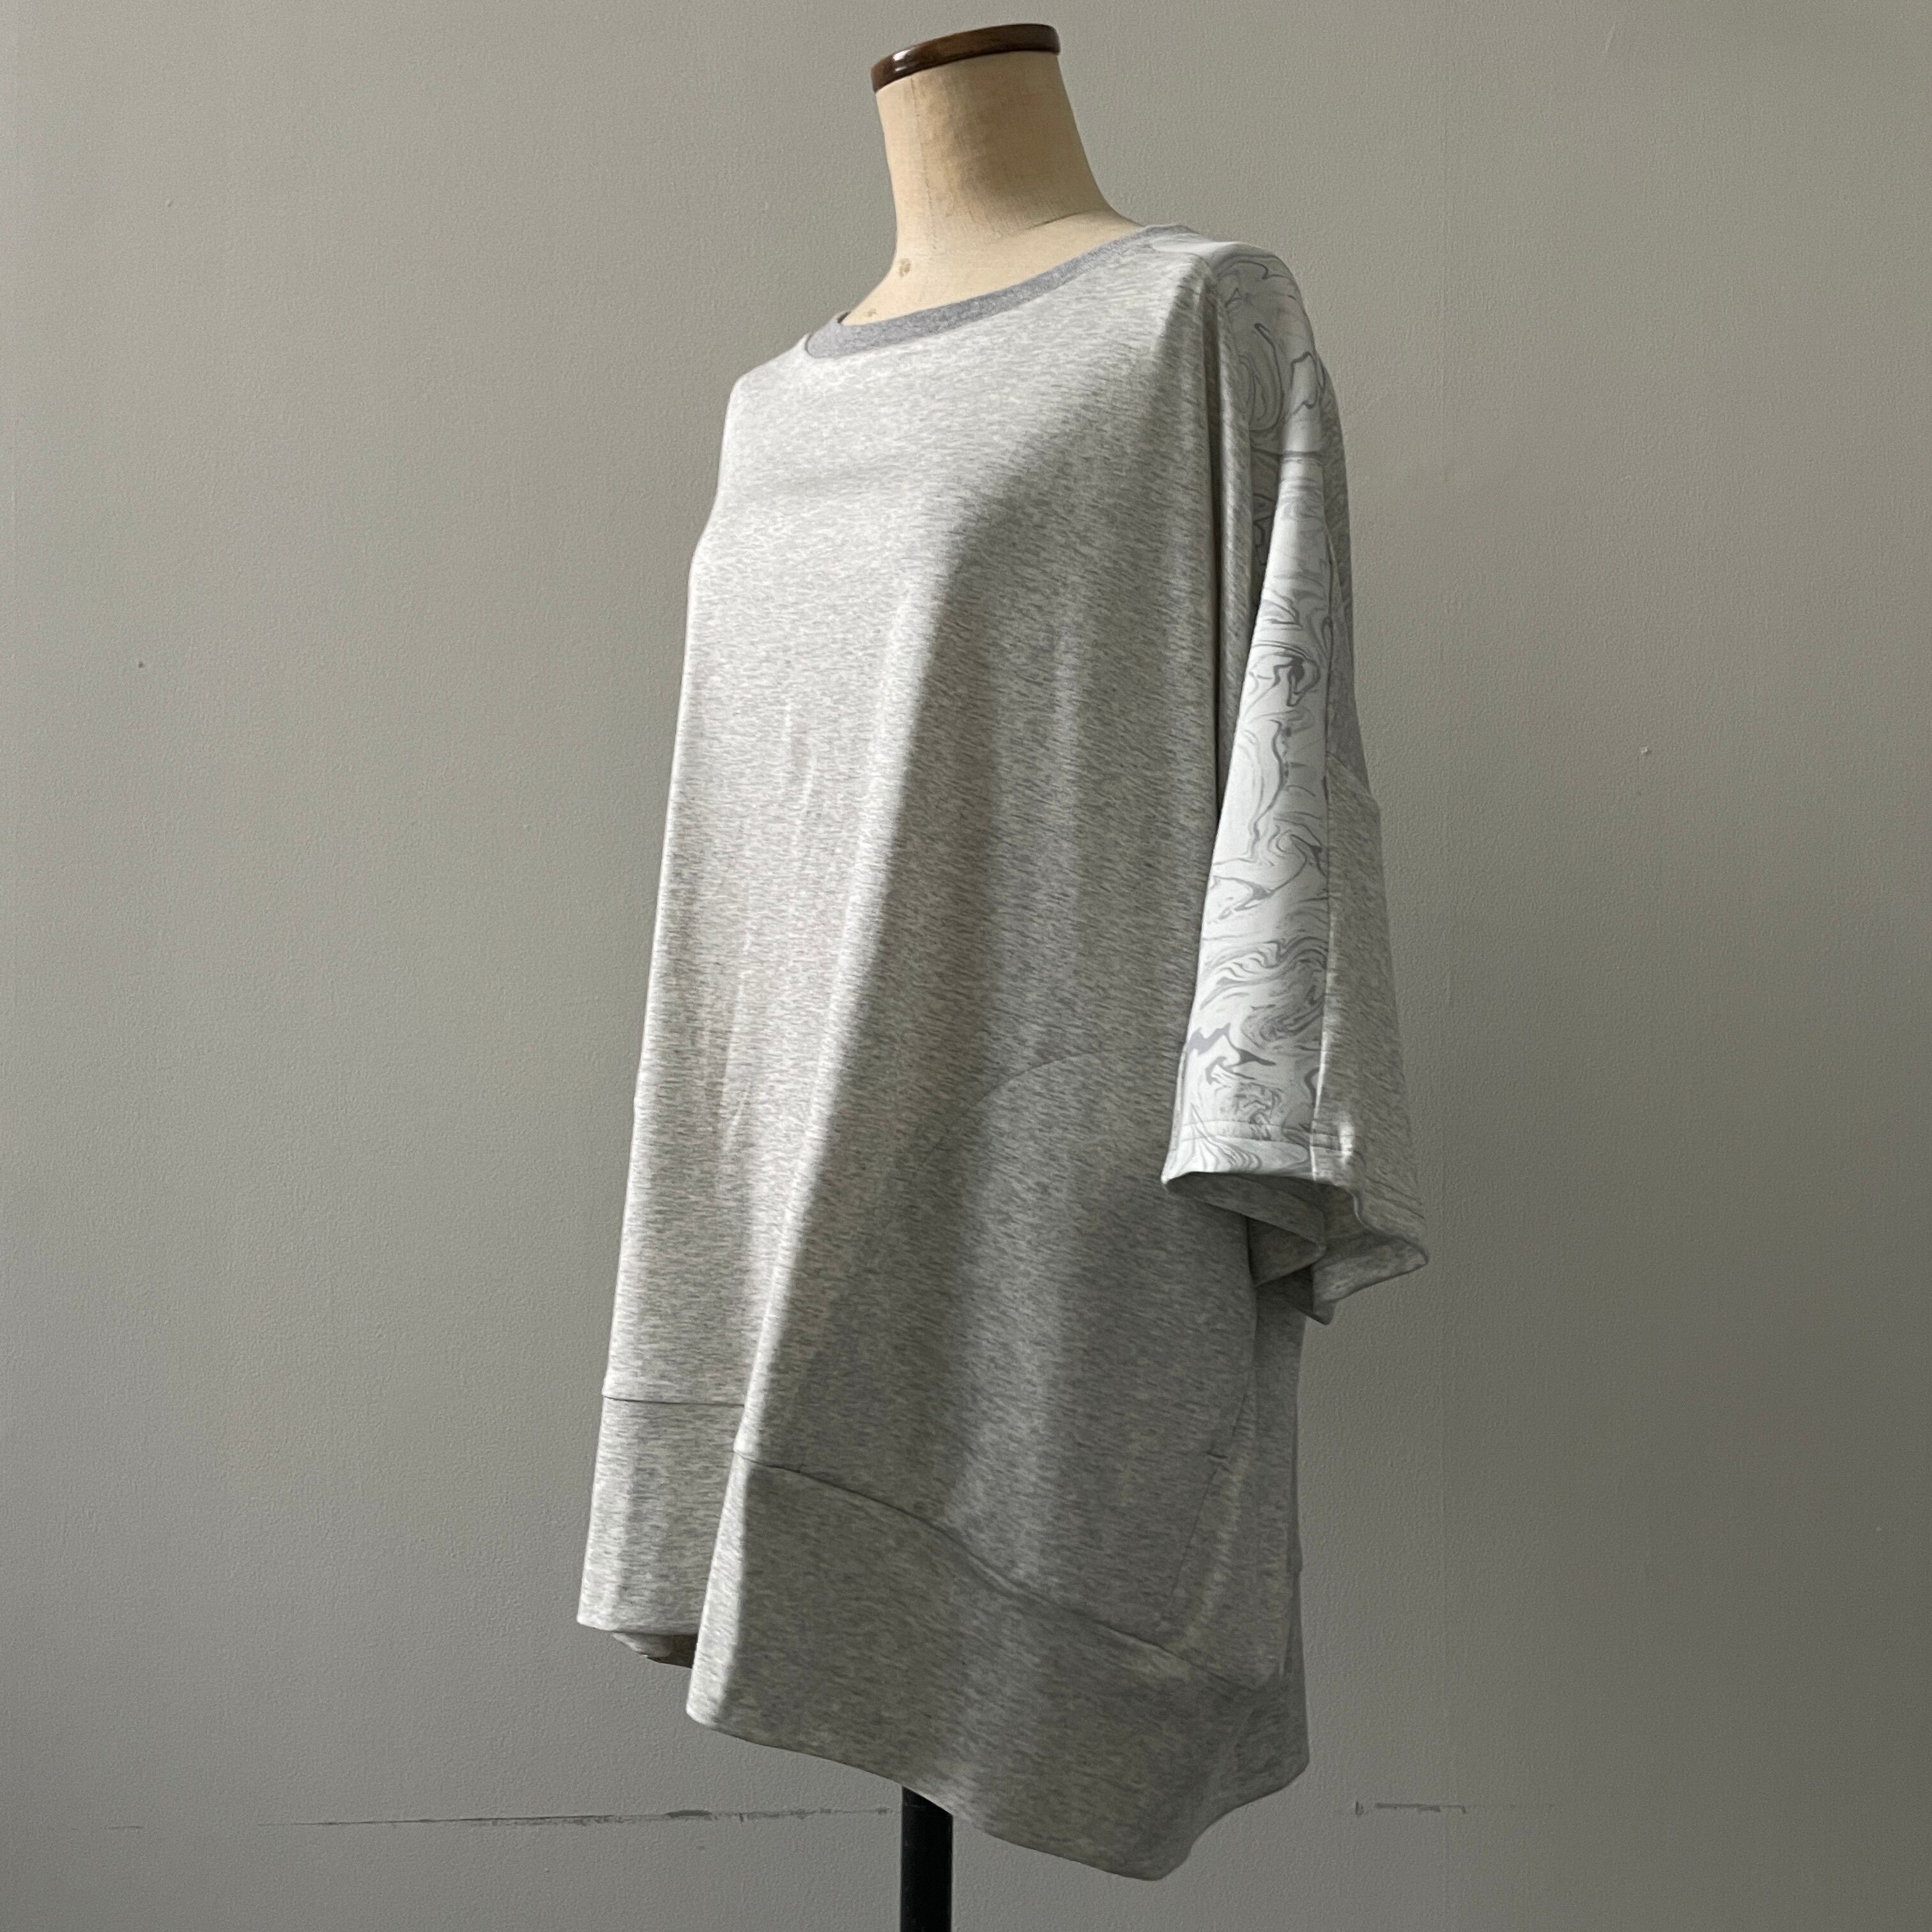 Plain-T-shirts (grey)